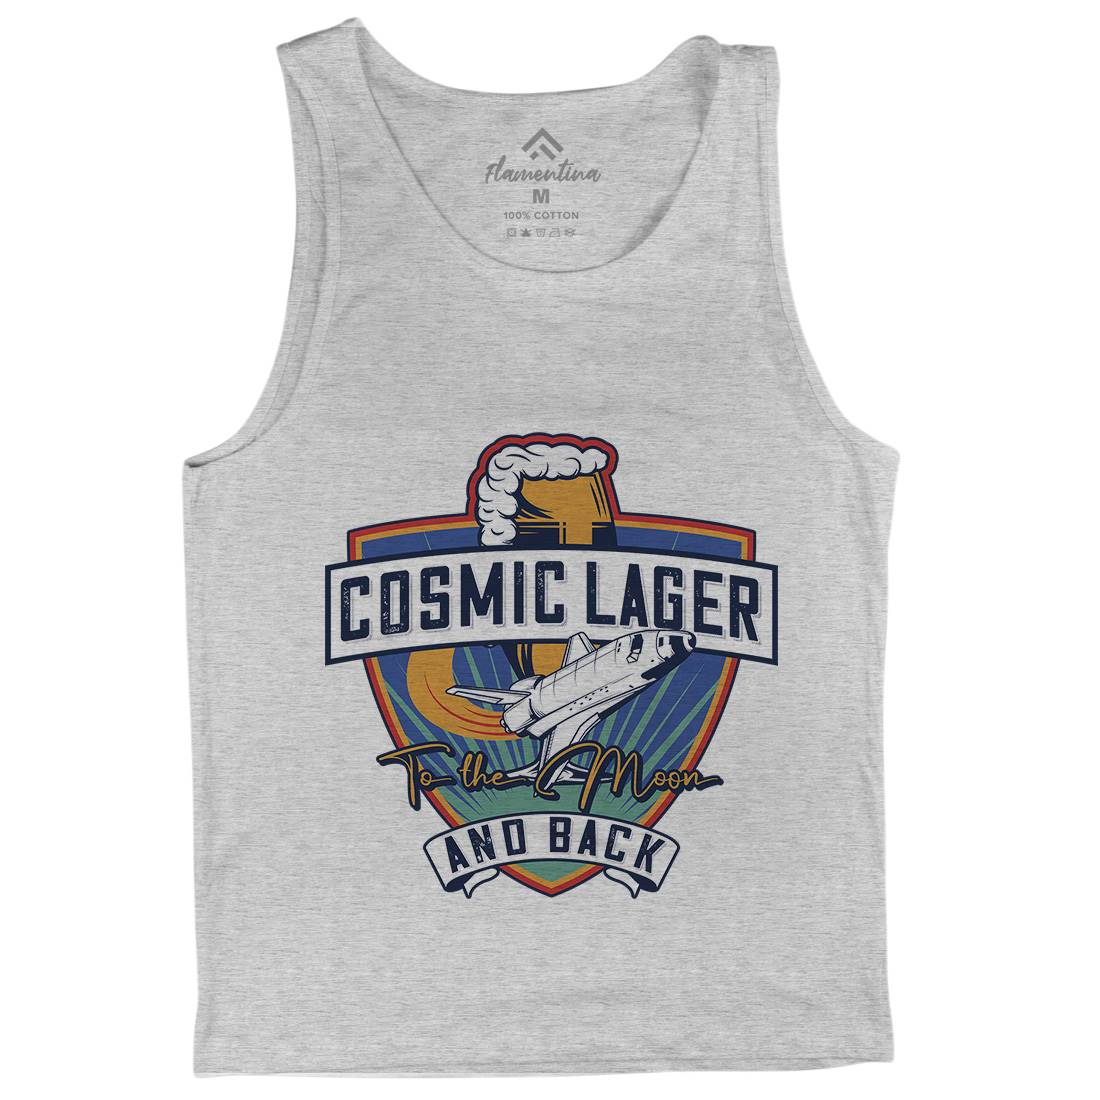 Cosmic Lager Mens Tank Top Vest Drinks C862